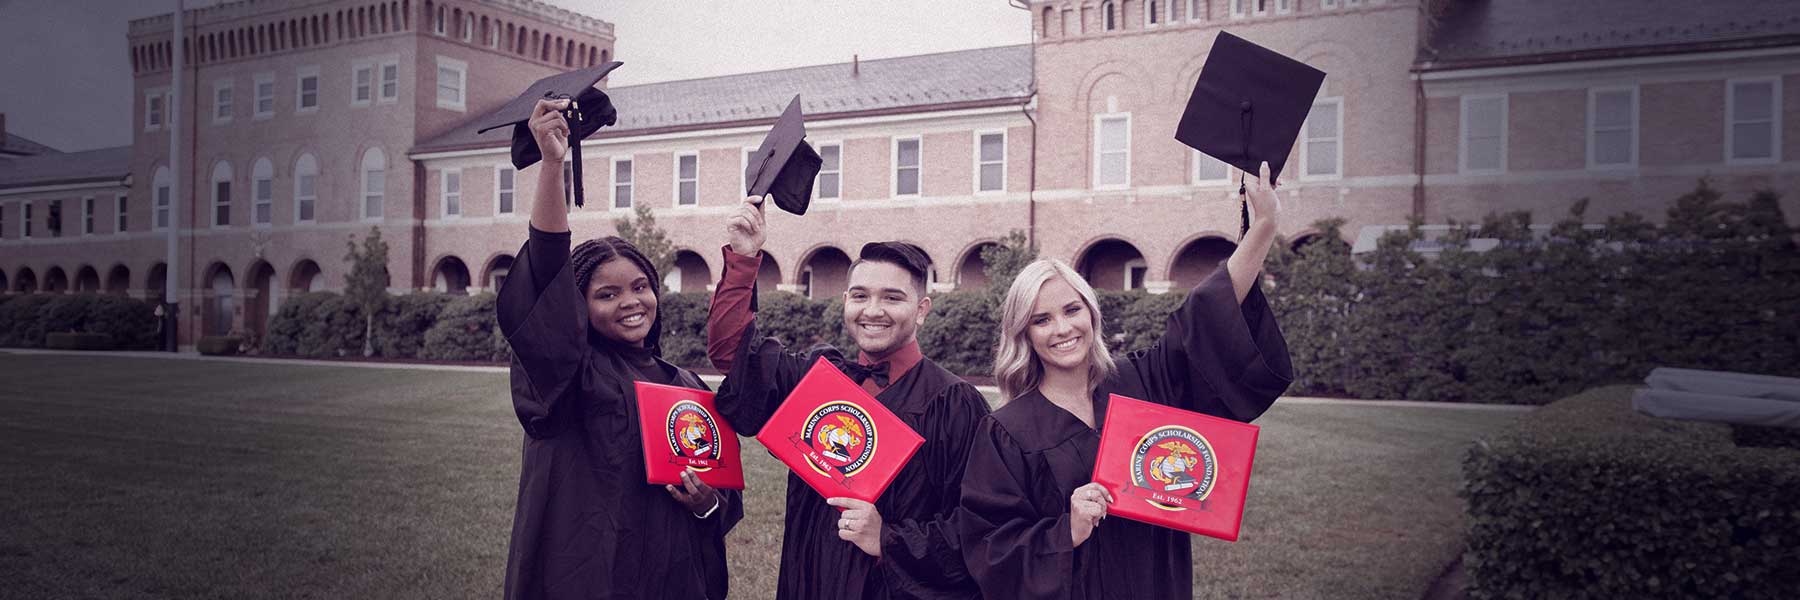 Apply Now - Marine Corps Scholarship Foundation